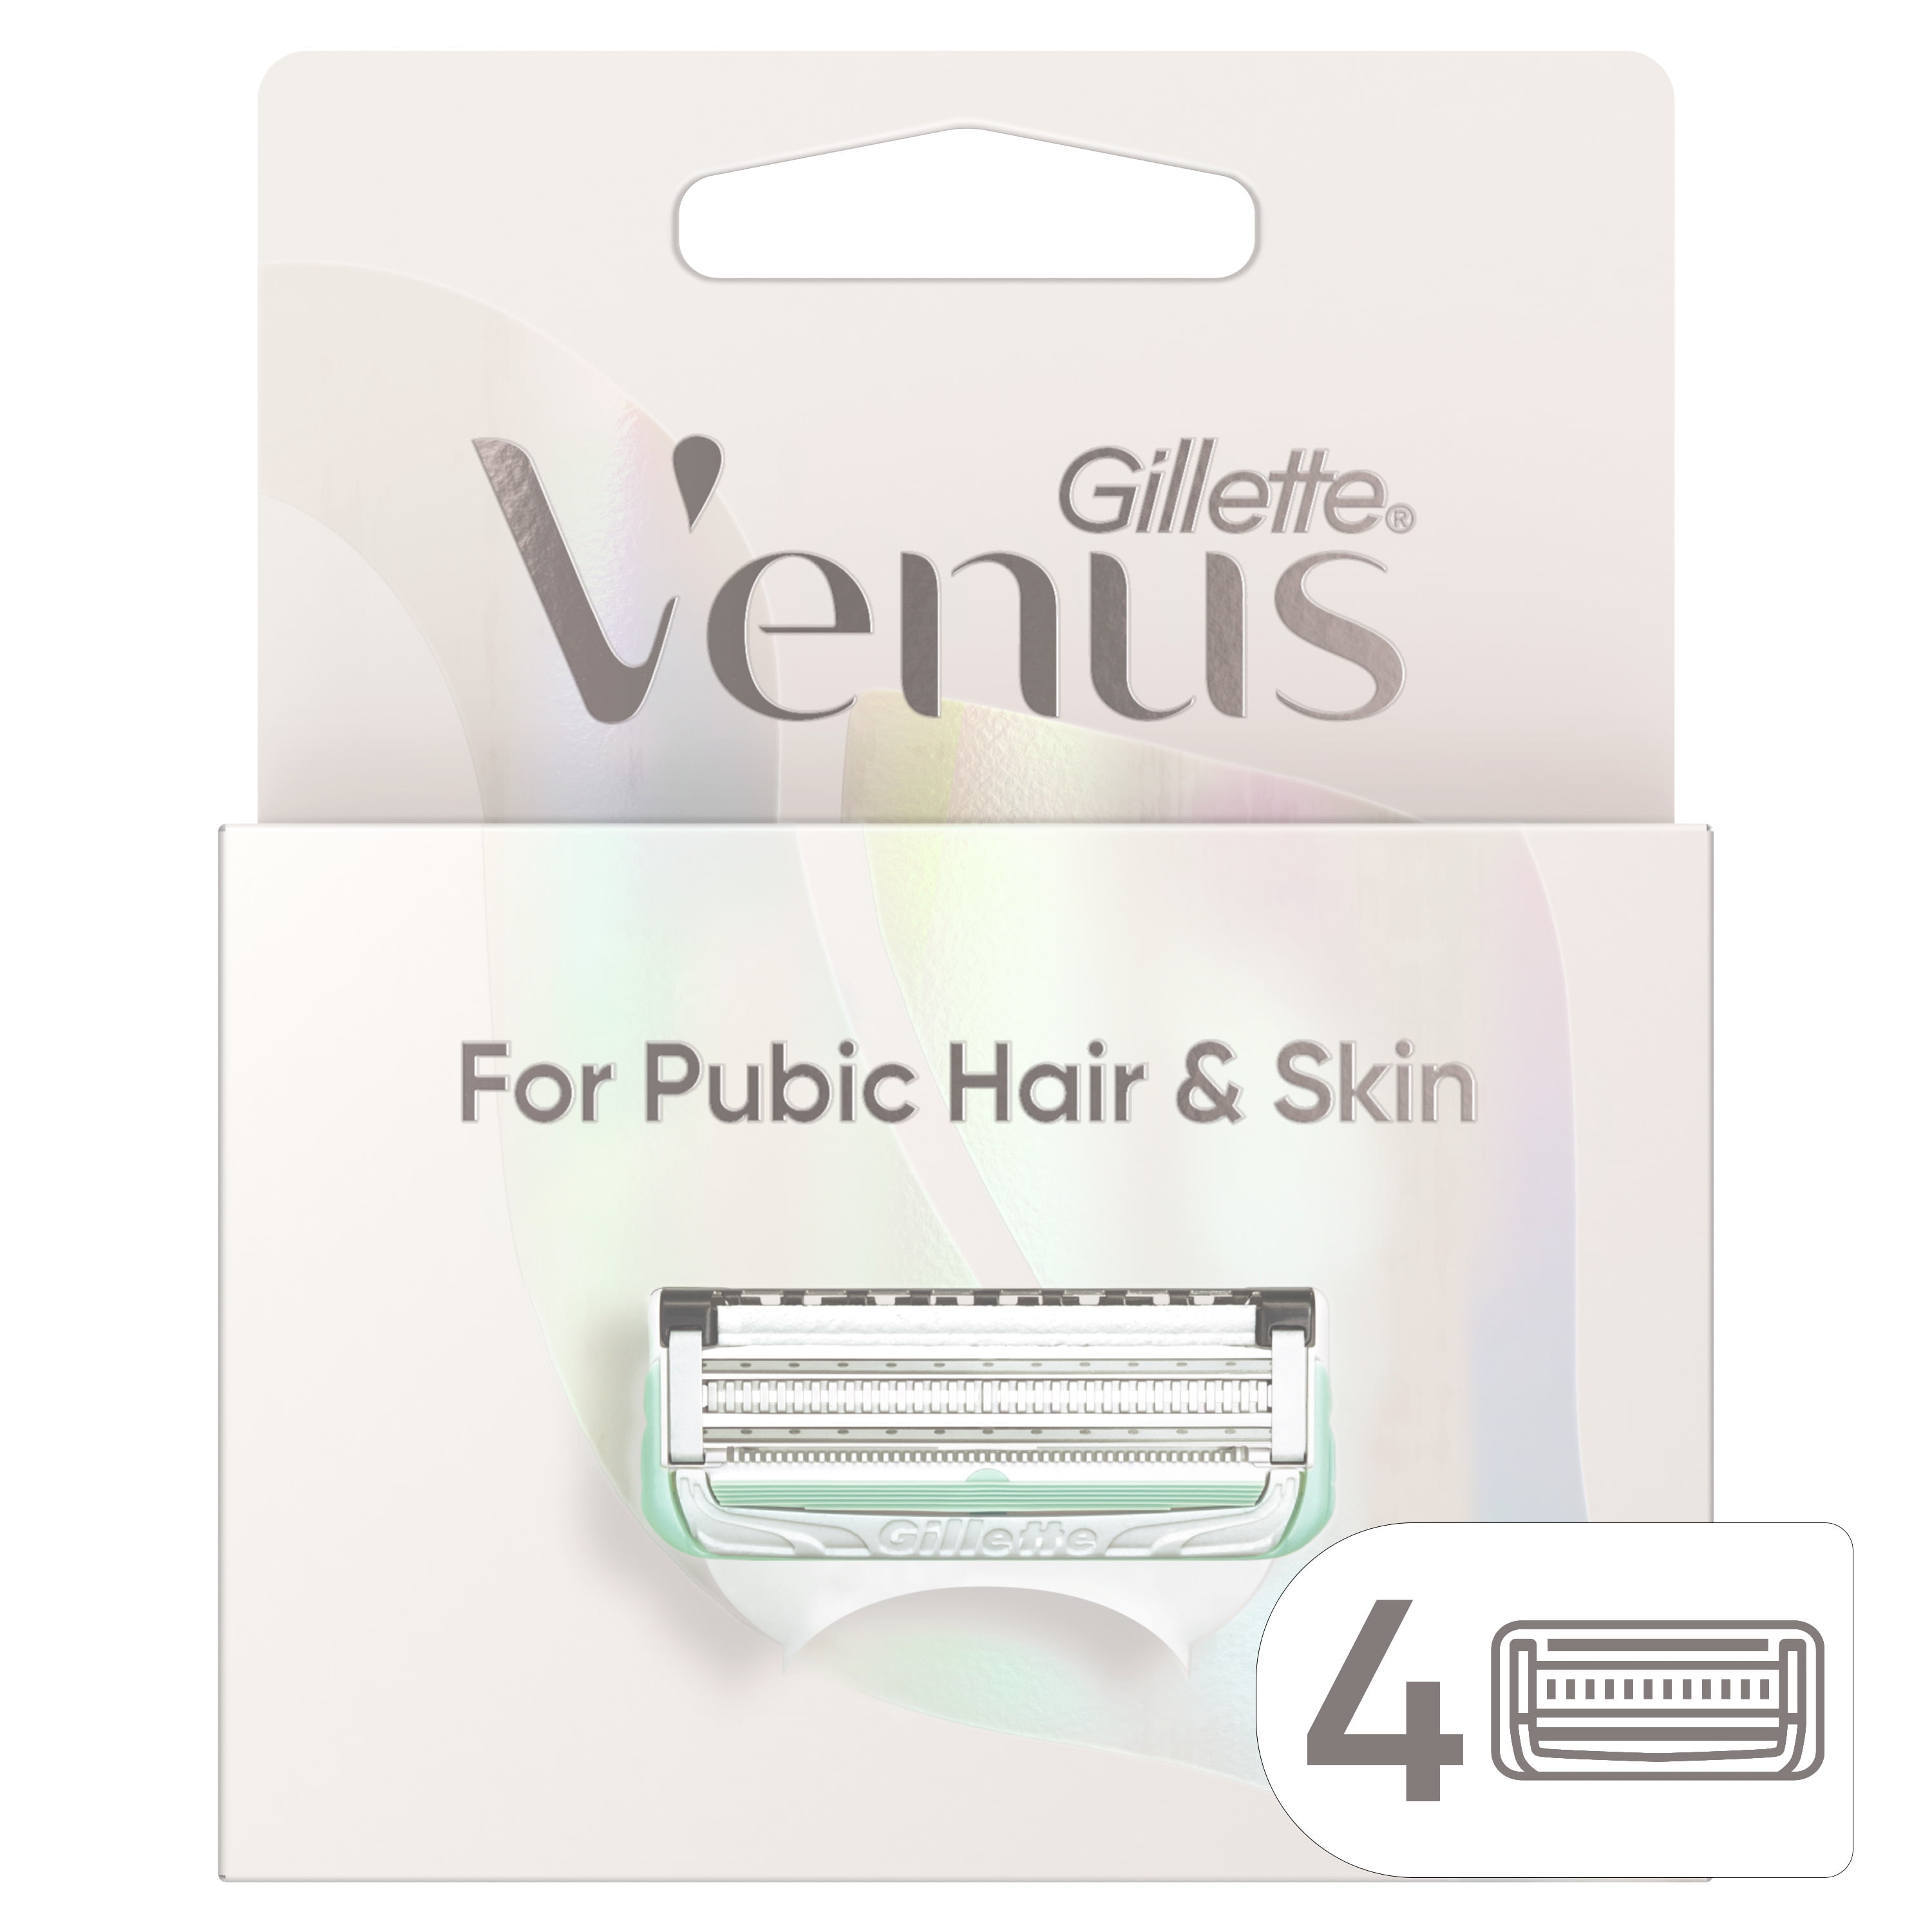 Gillette Venus for Pubic Hair and Skin, Women's Razor Blades, 4 Refills